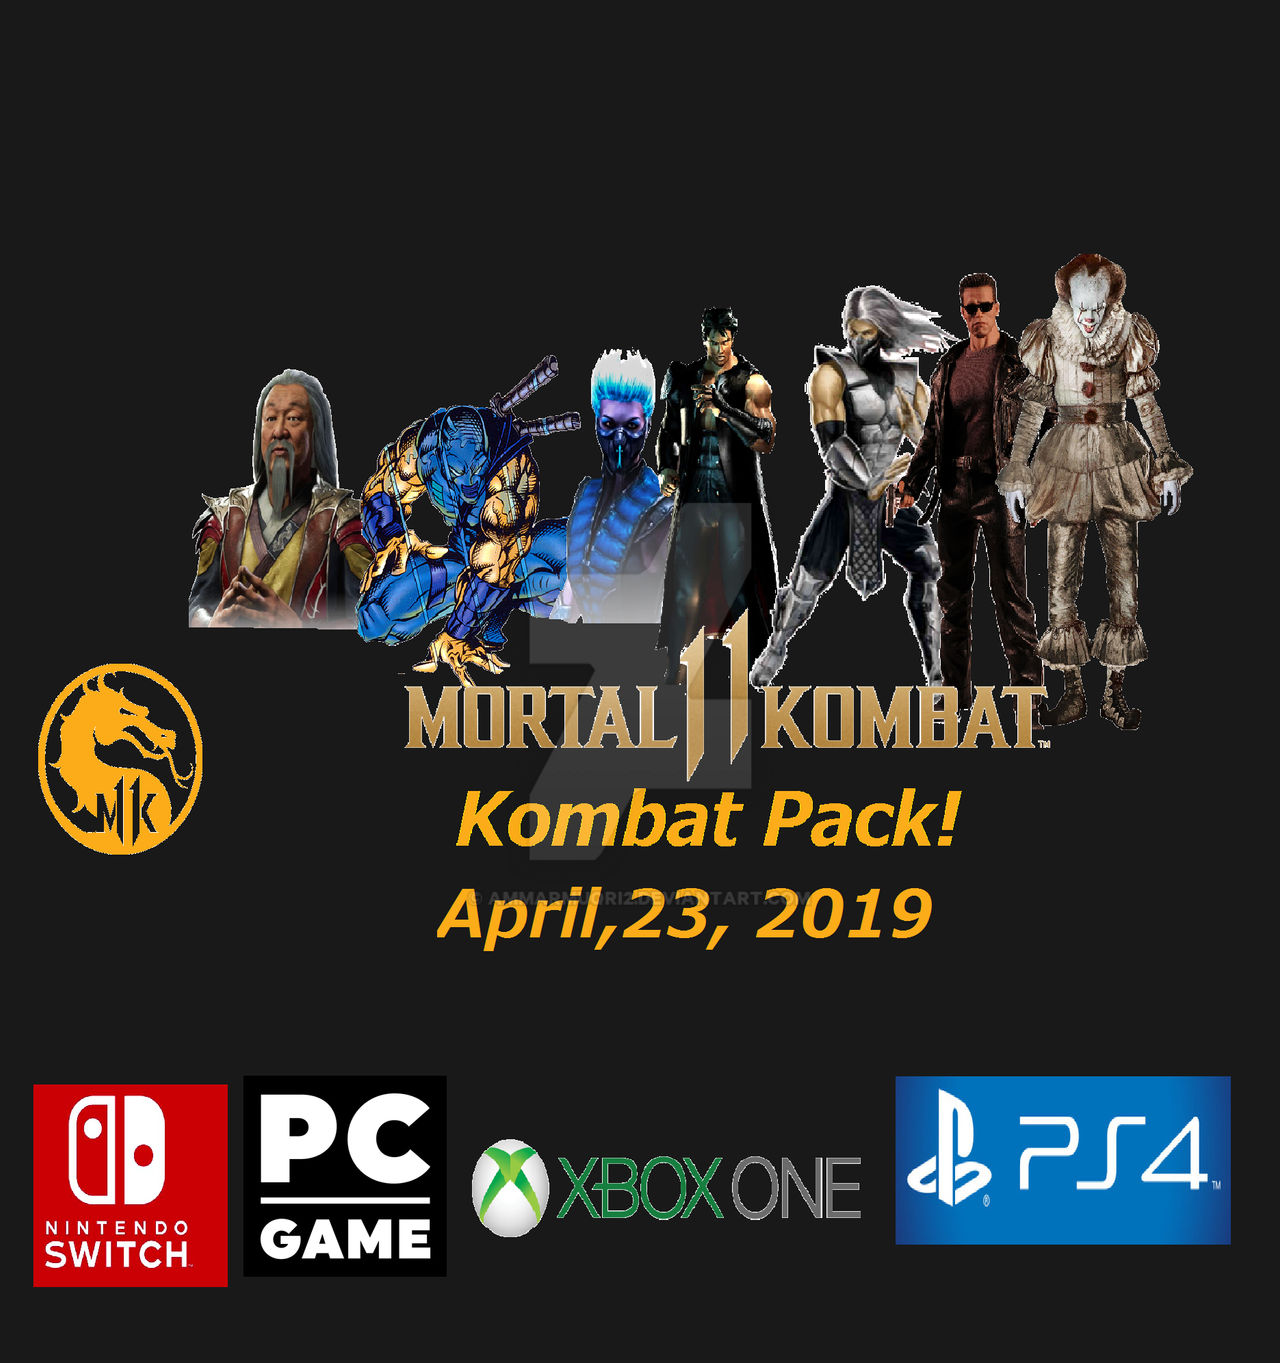 Mortal Kombat 11 Kombat Pack 7 by masondcshg on DeviantArt